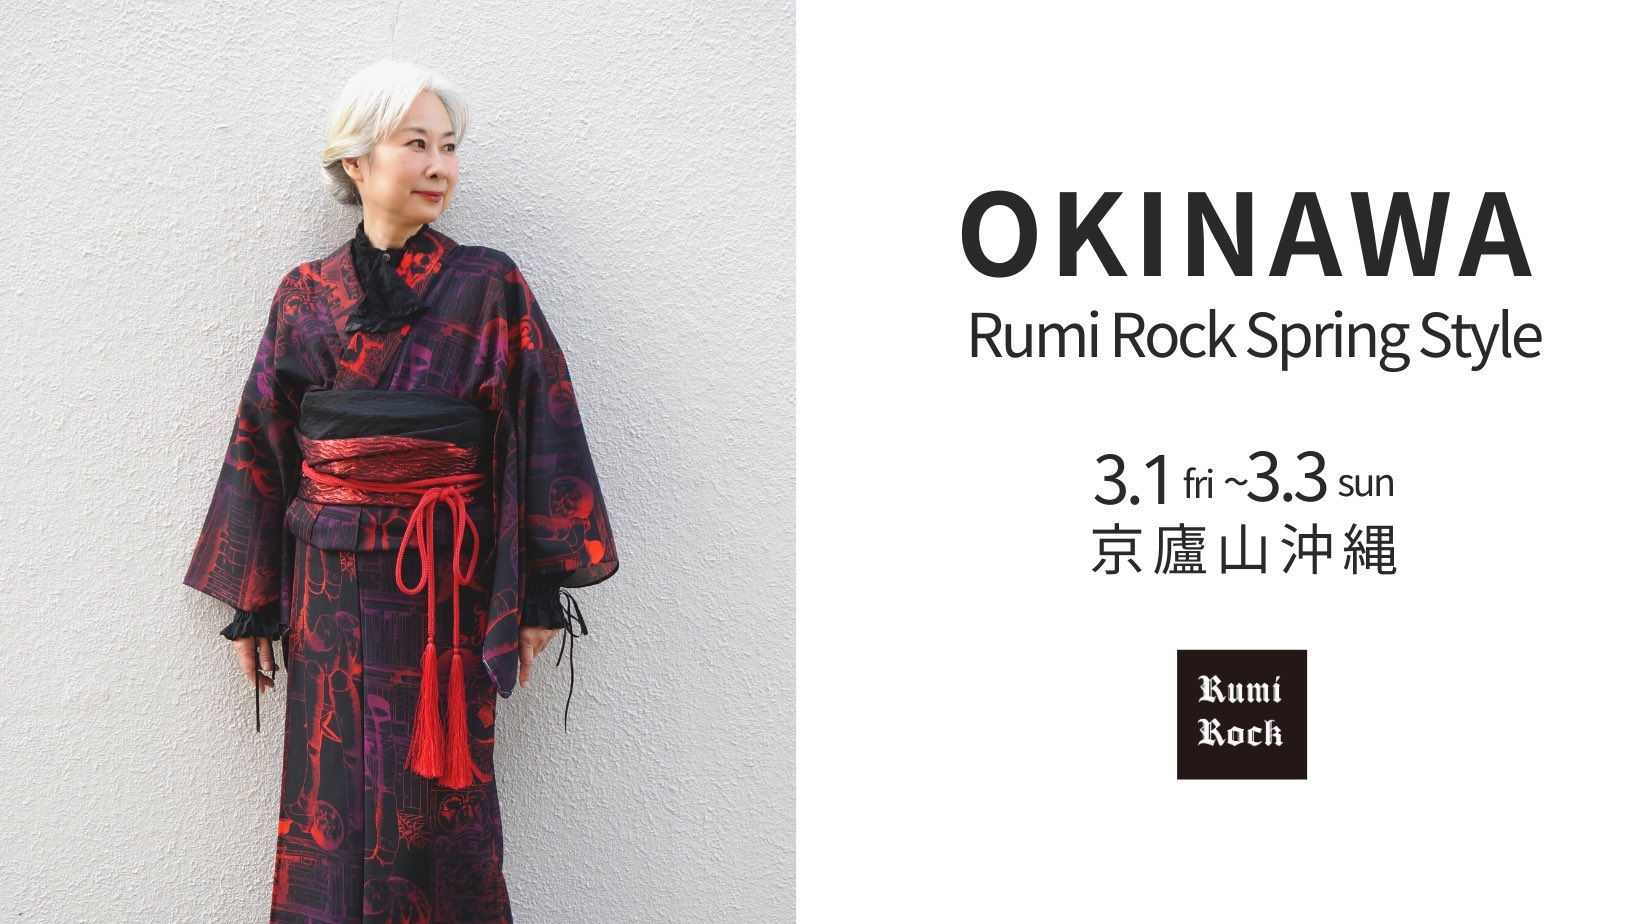 Rumi Rock Spring Style in 沖縄